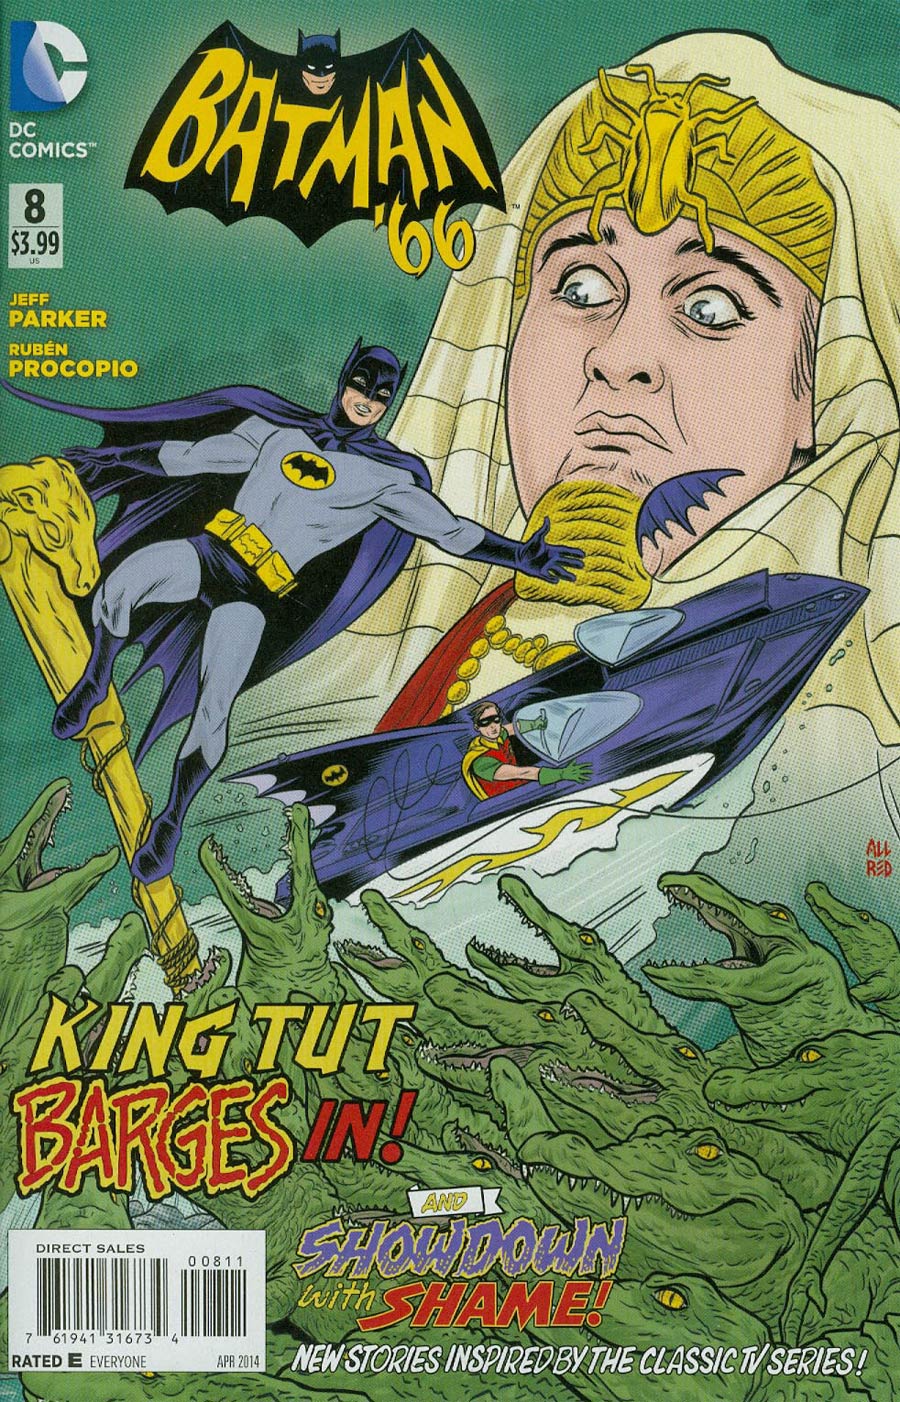 Batman 66 #8